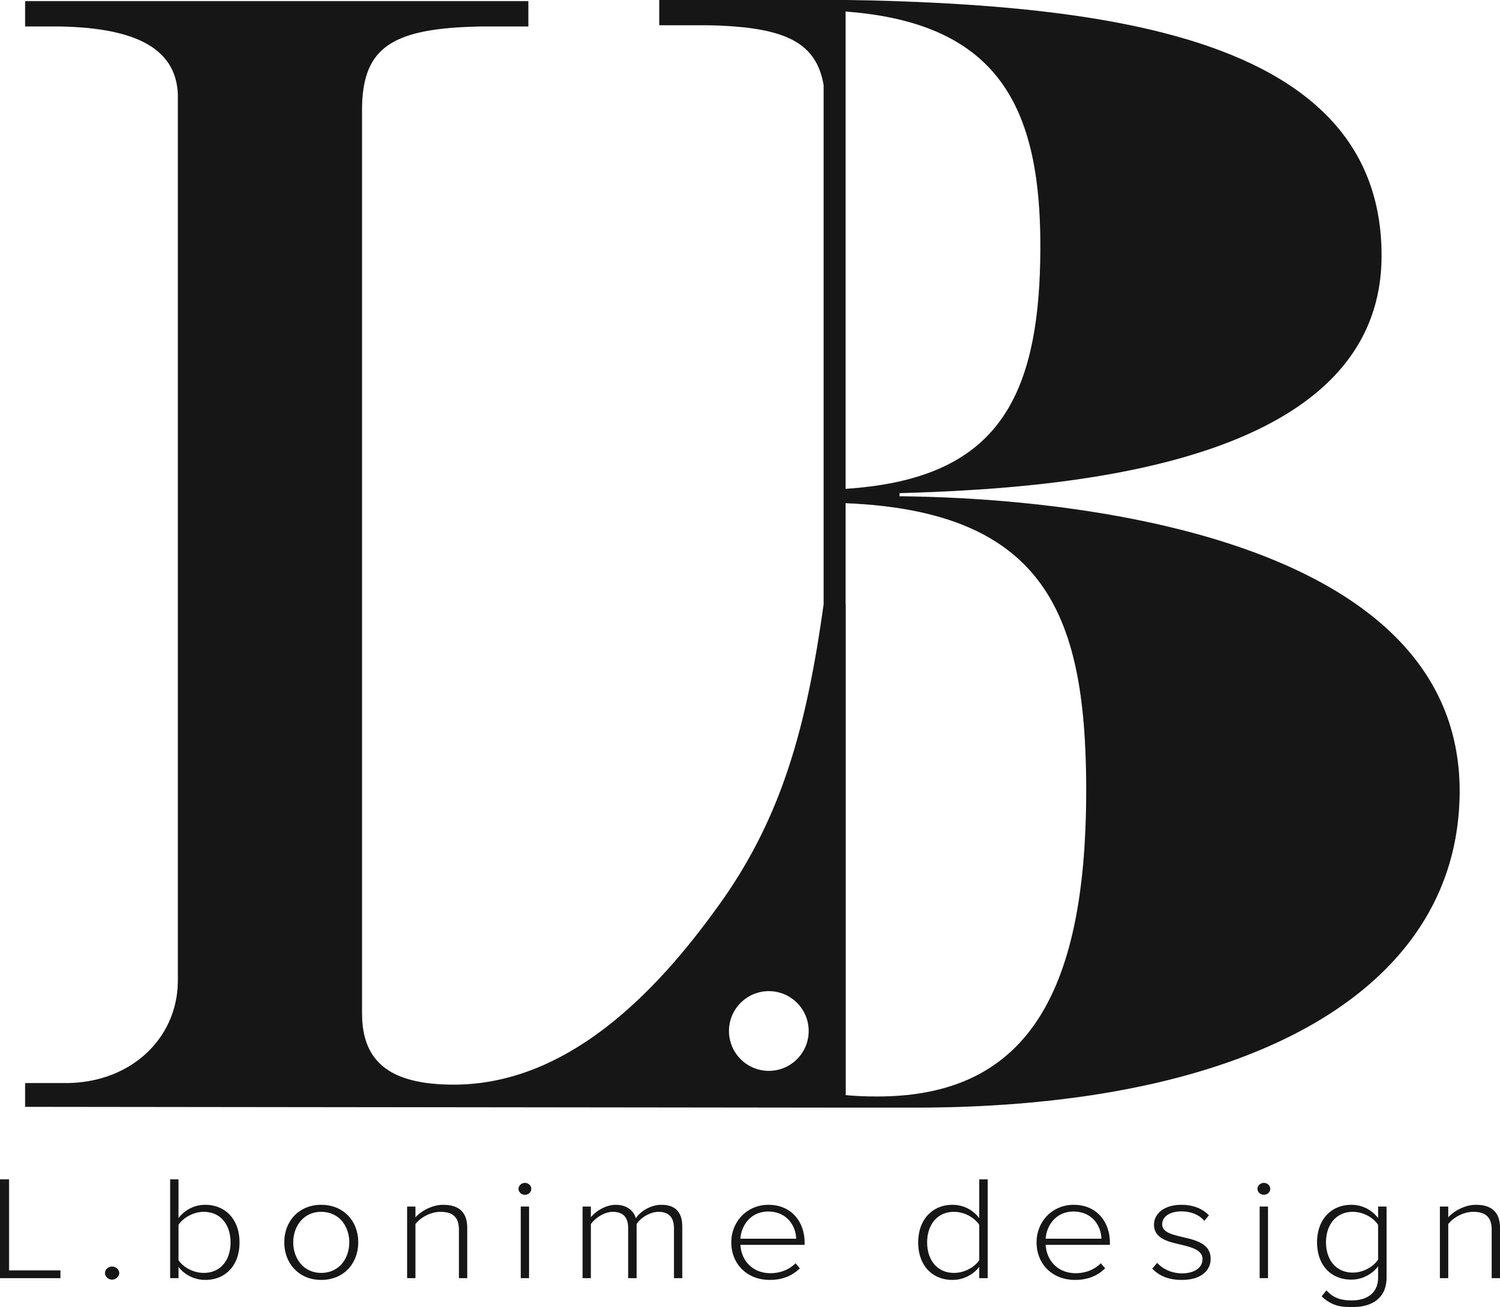 L. bonime design 